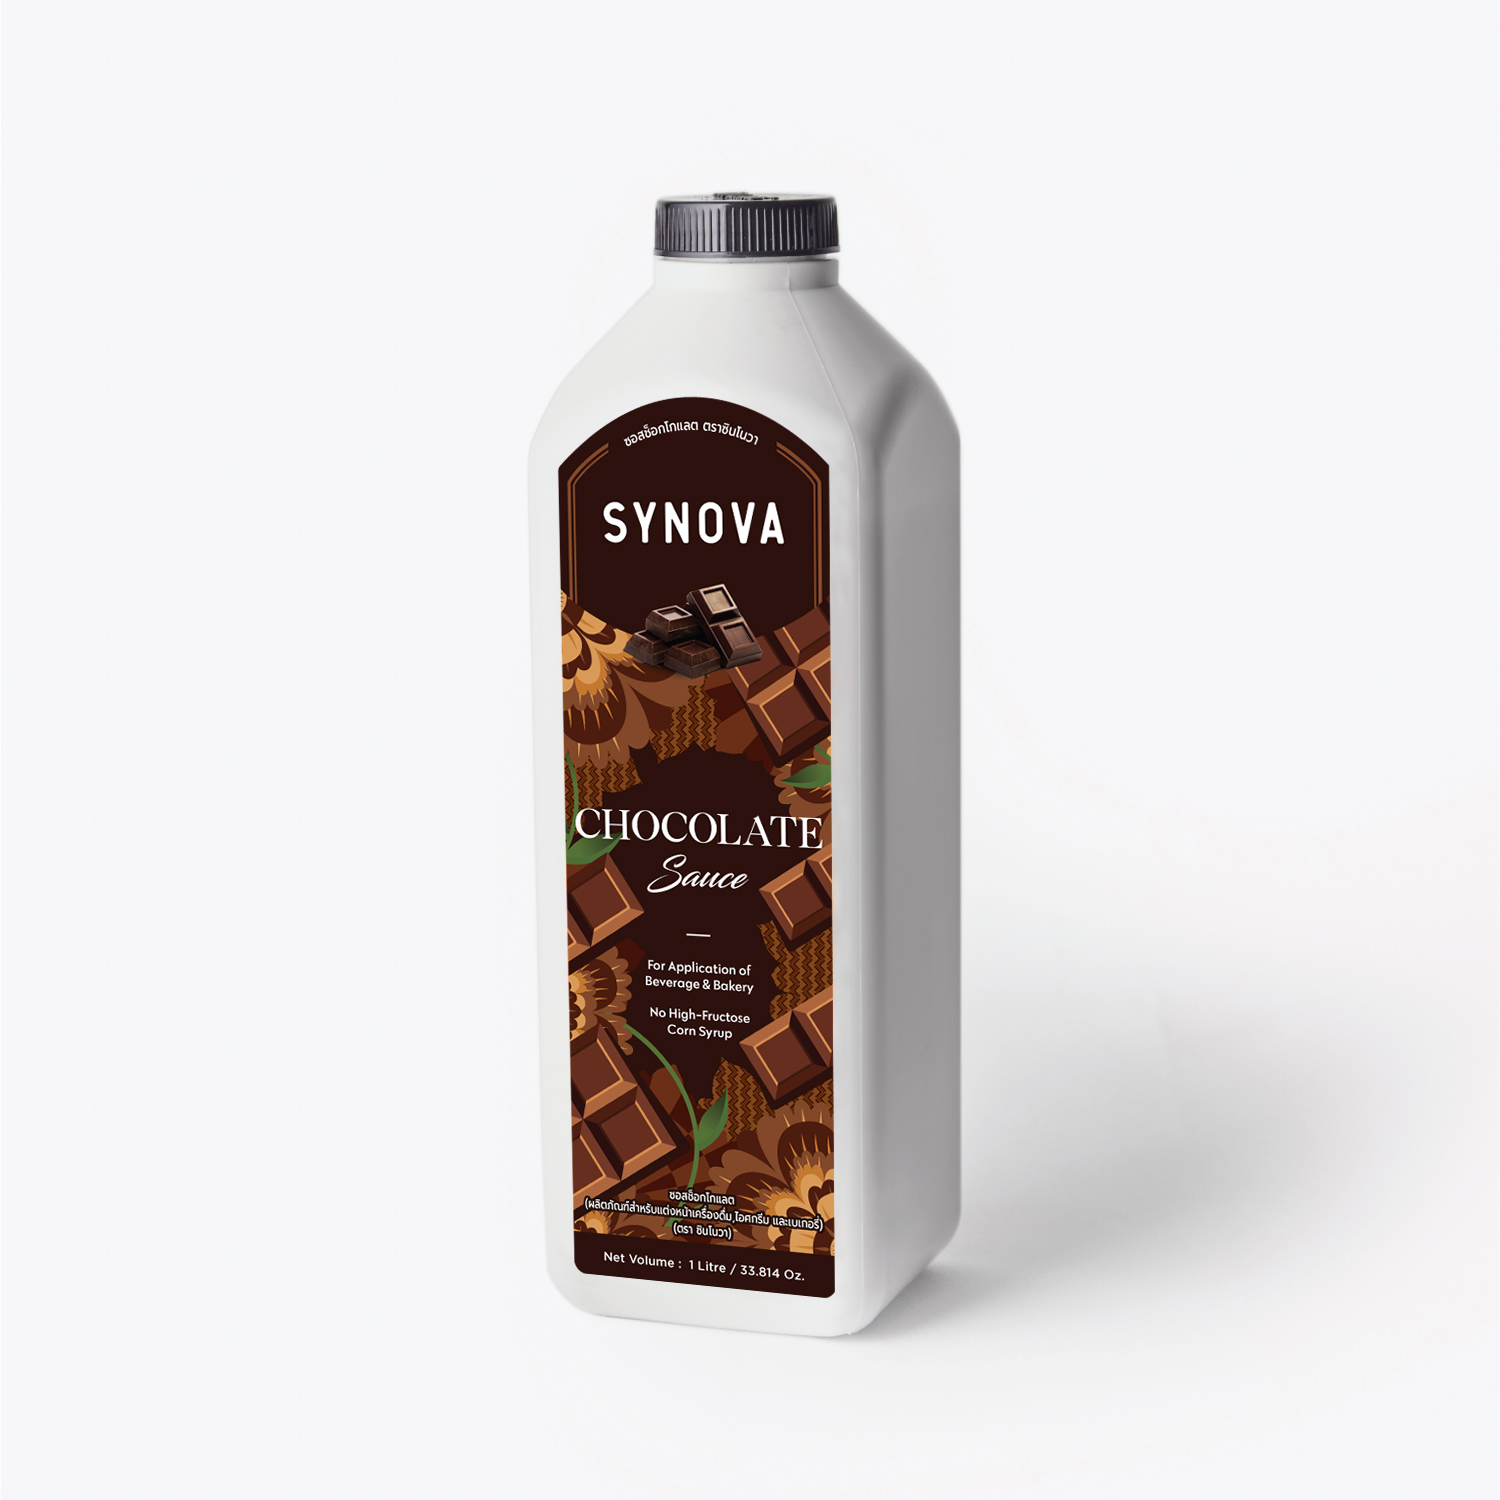 SYNOVA Chocolate Sauce (Box)